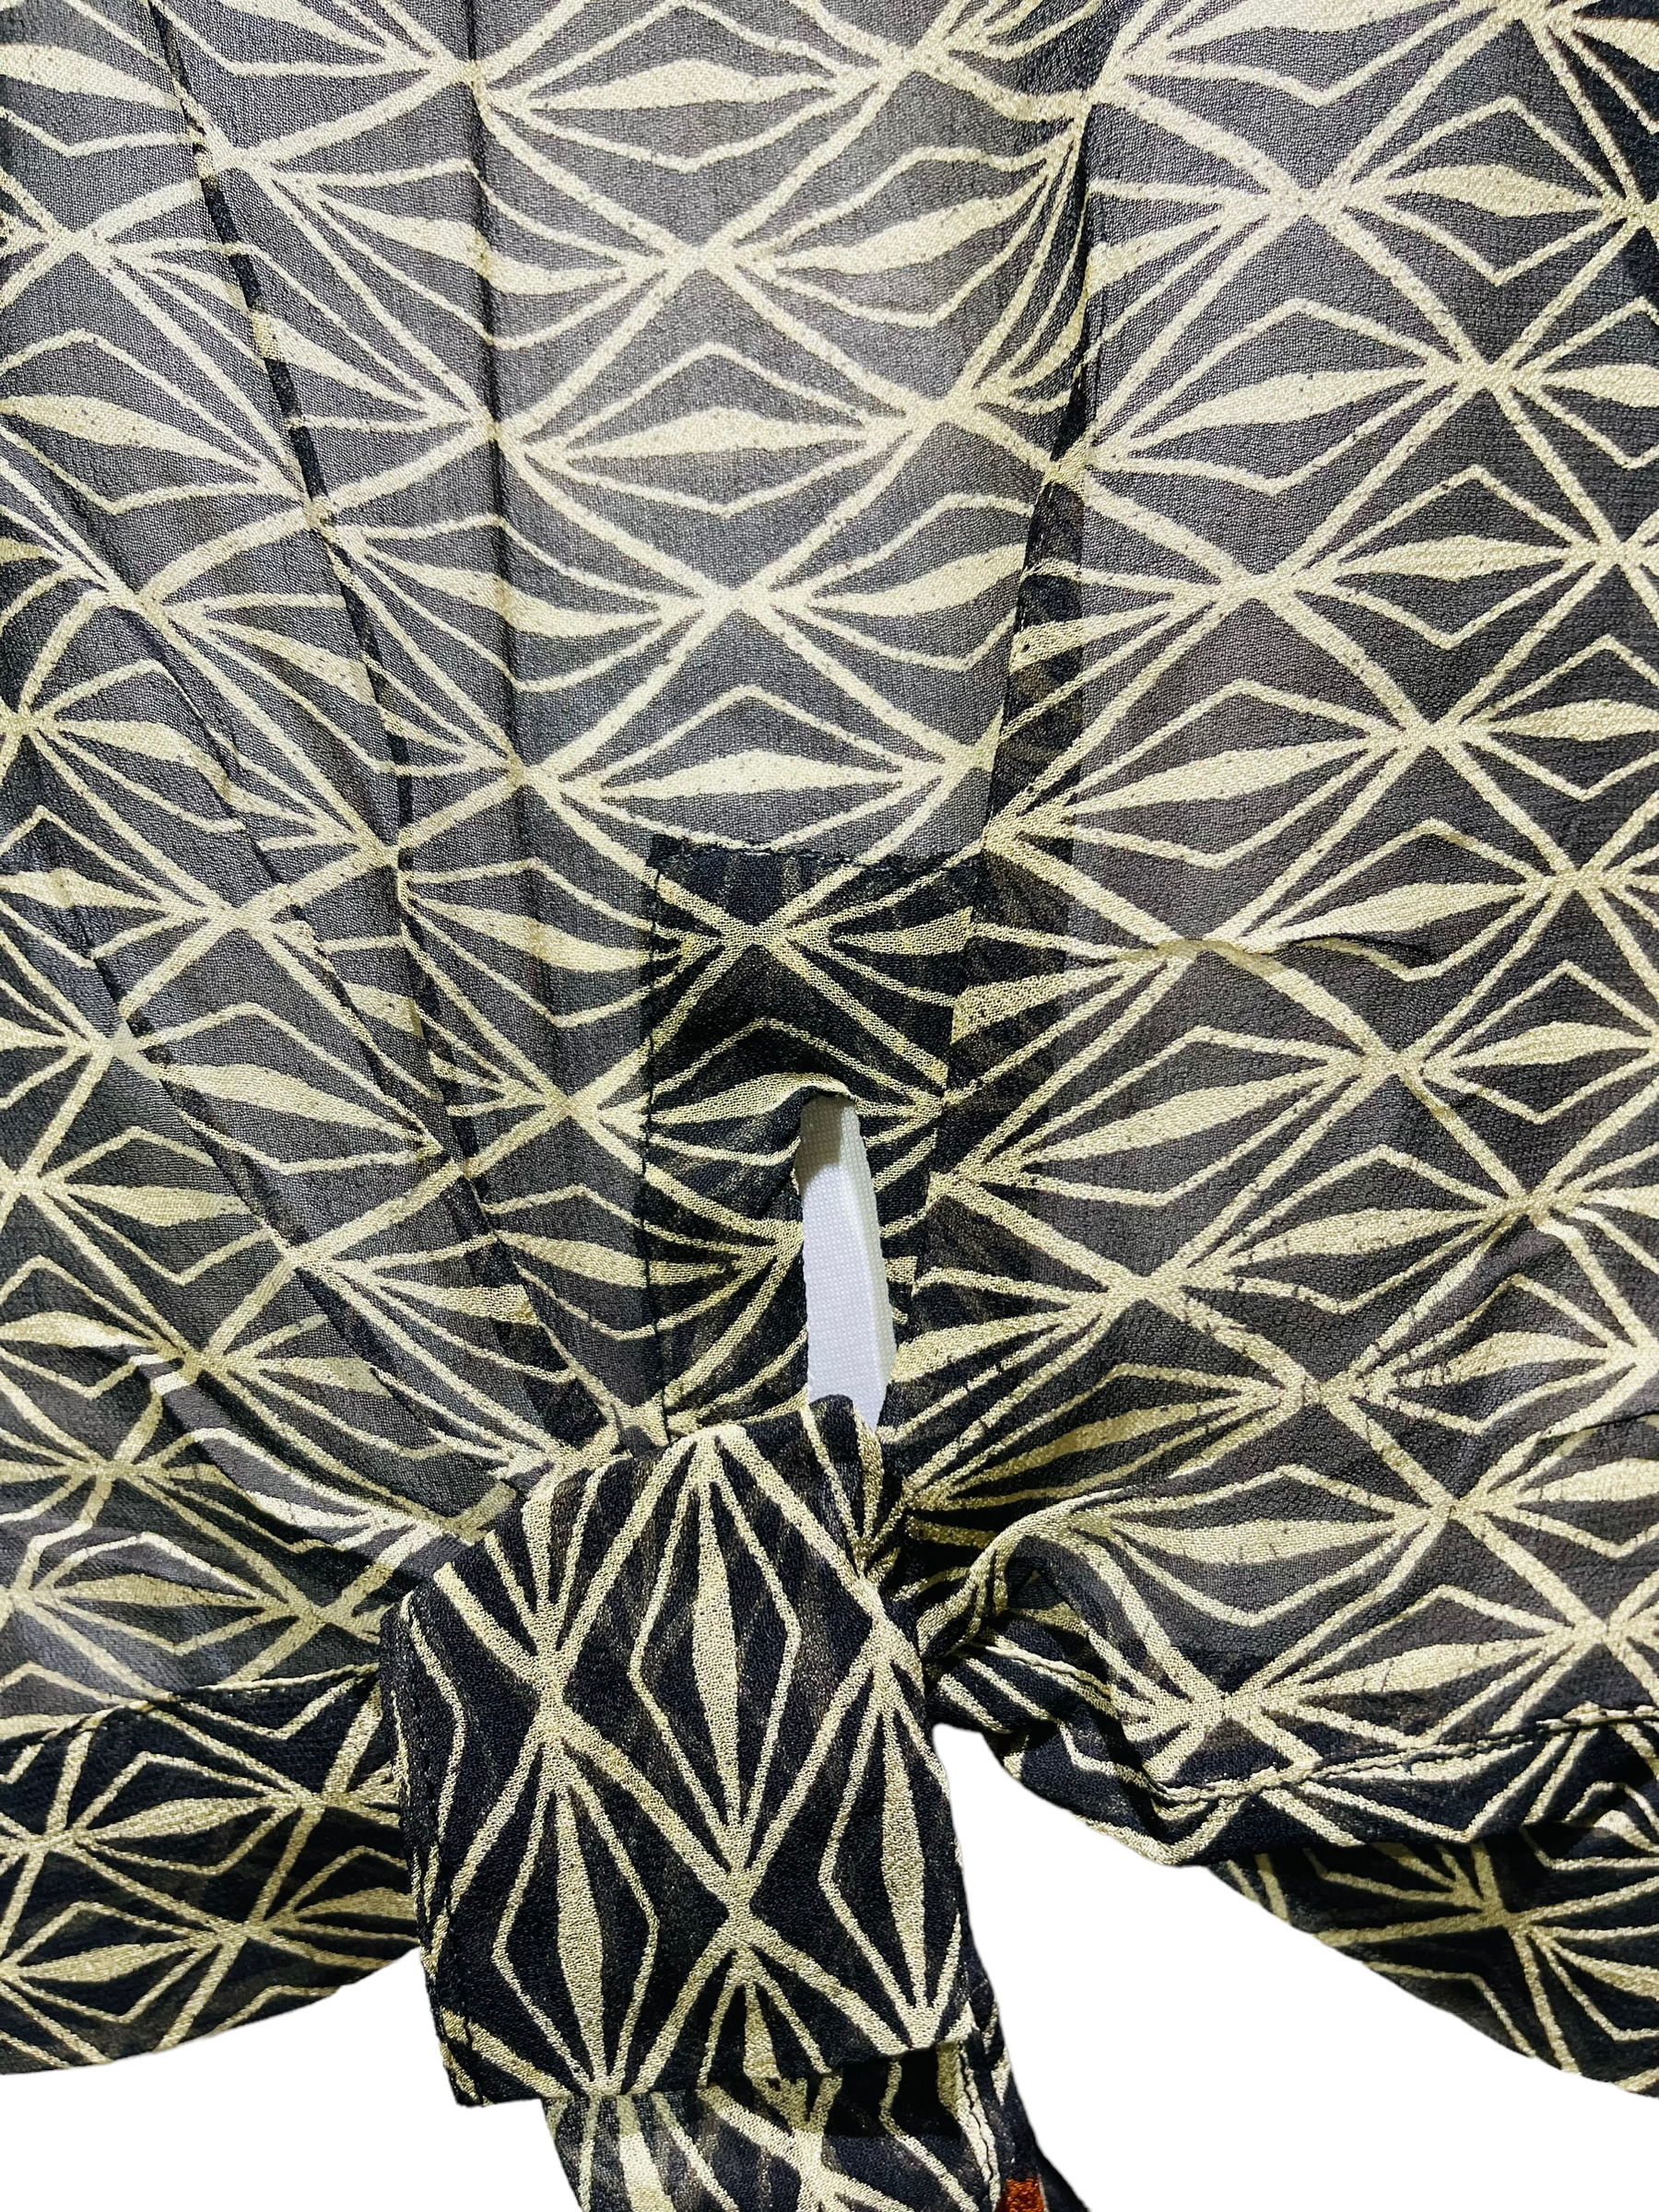 Helen Lundeberg Sheer Avatar Pure Silk Front Tie Top